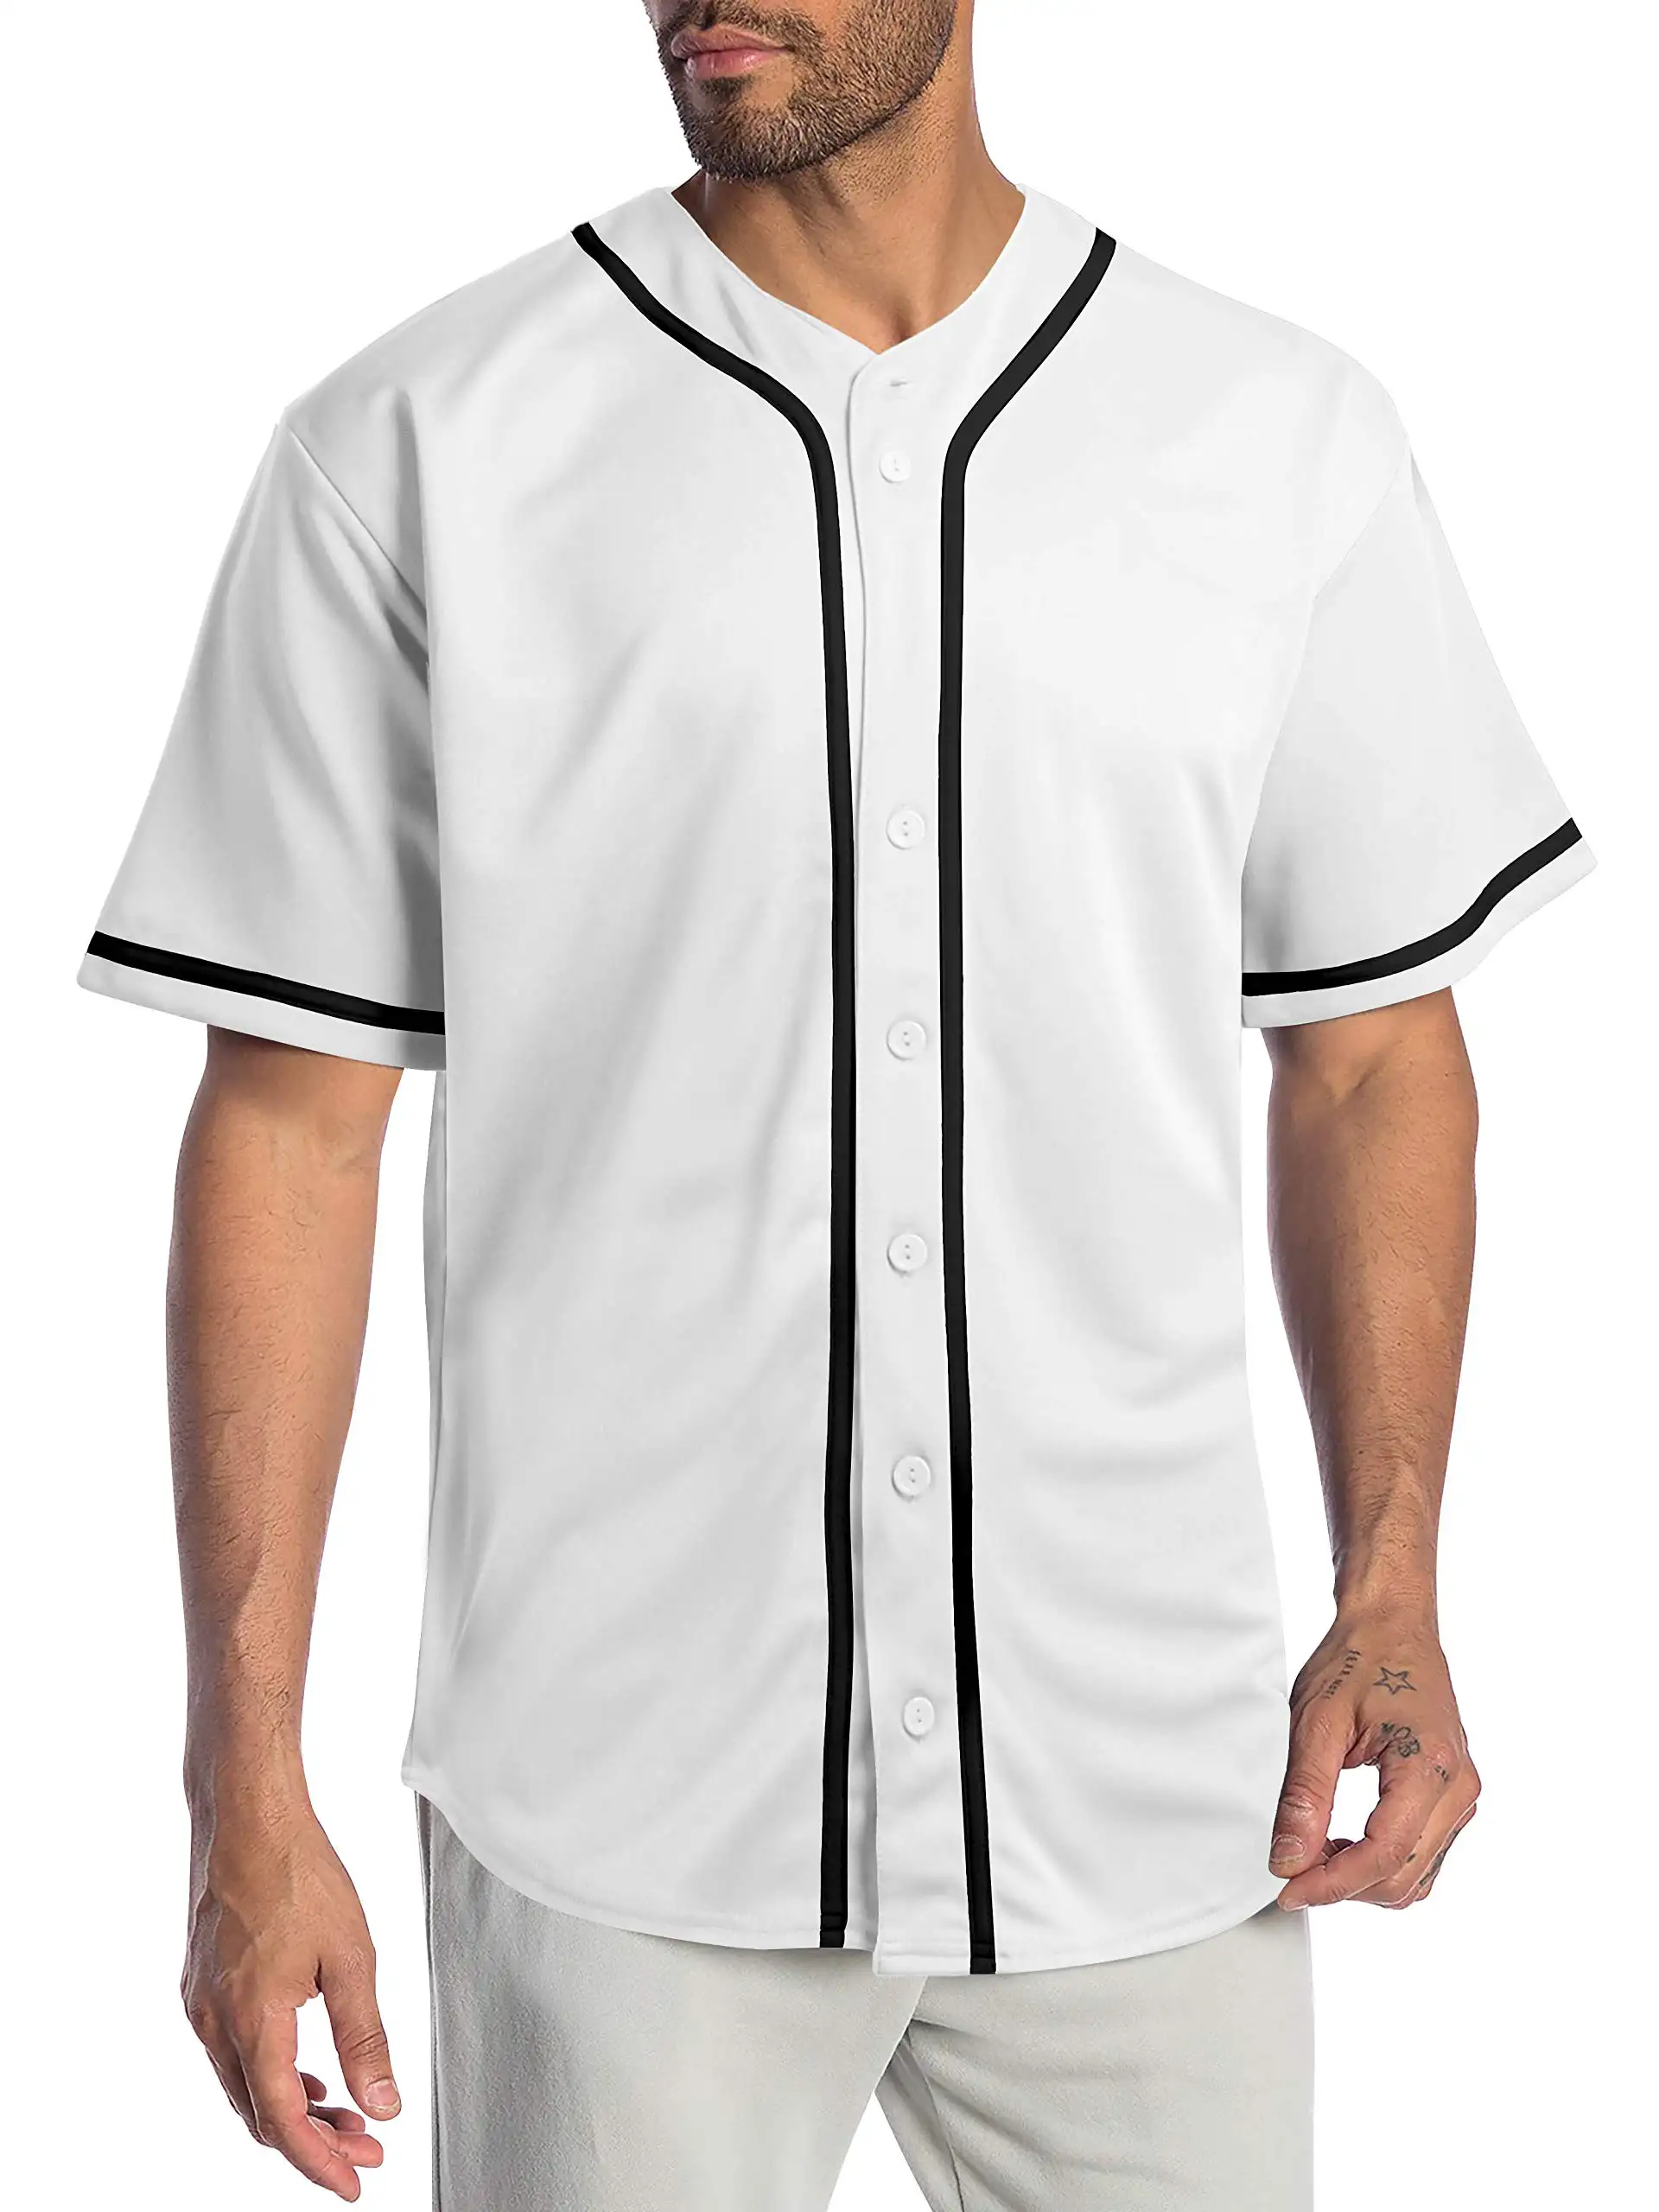 Custom Sublimated Team Name Logo Number Printing Sports Baseball Wear Uniform Jackets Women Men Baseball Jerseys